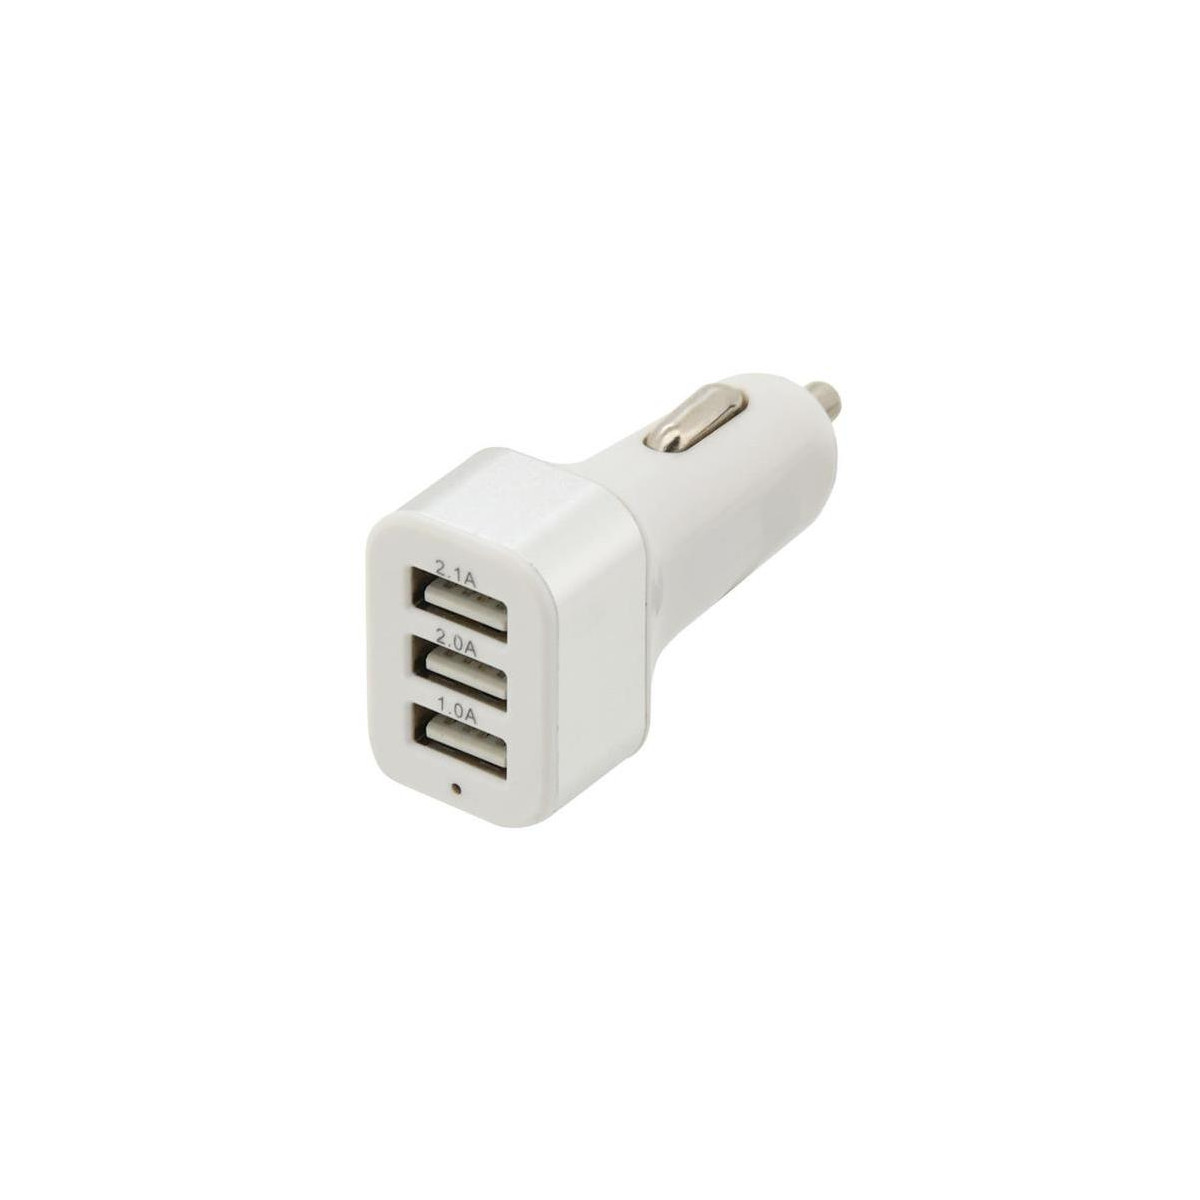 More about Autoadaptér USB COMPASS 07407